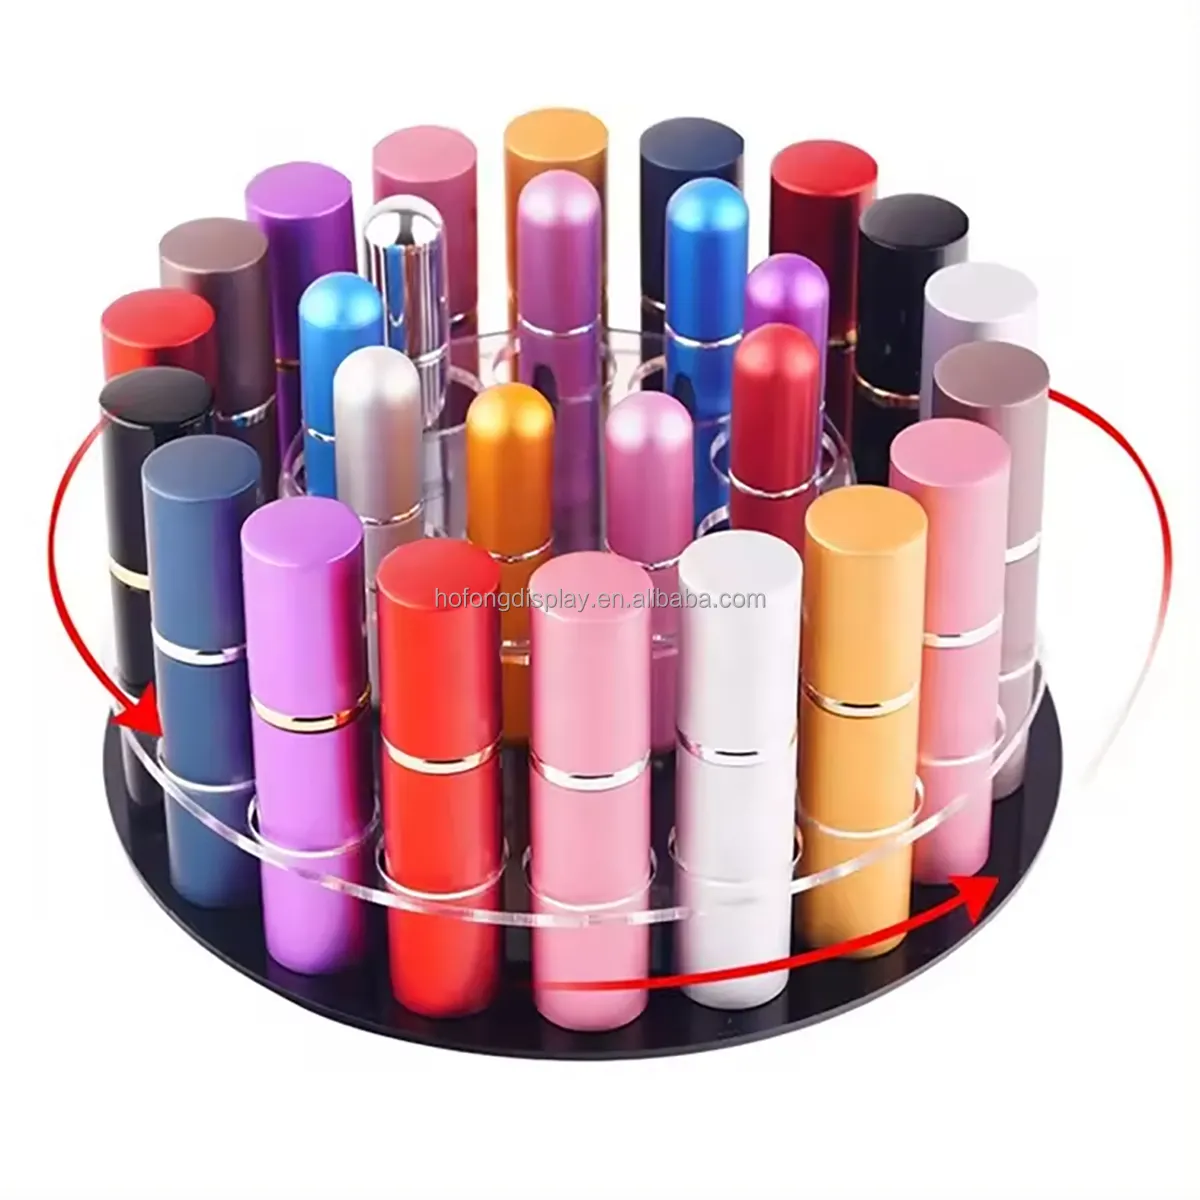 Transparent Acrylic Lipstick Holder Rotating Swivel Makeup Display Stand Lip Gloss Nail Polish Display Stand